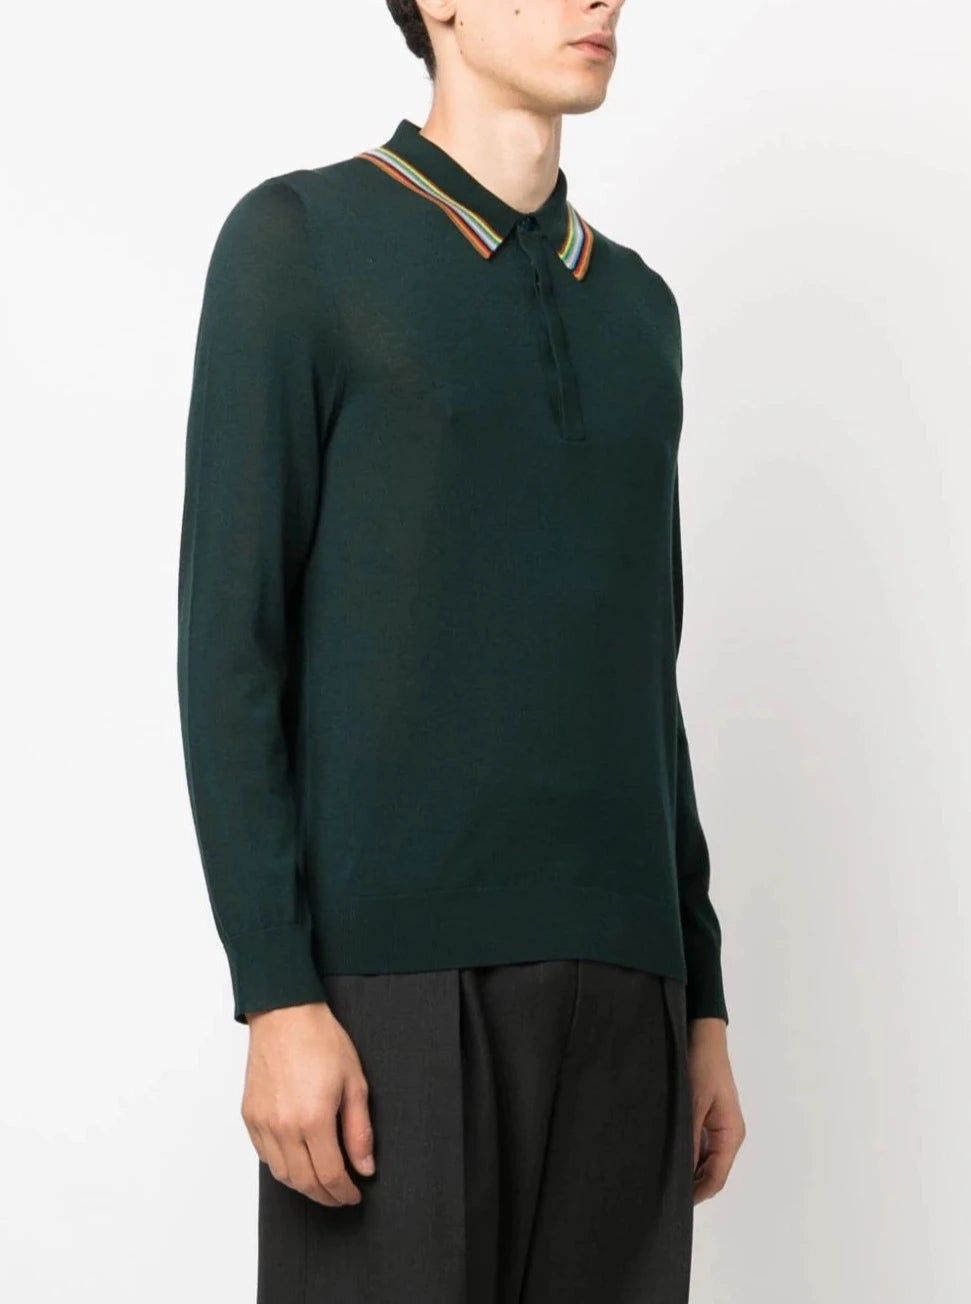 Paul Smith Dark Green Knitted Polo Shirt